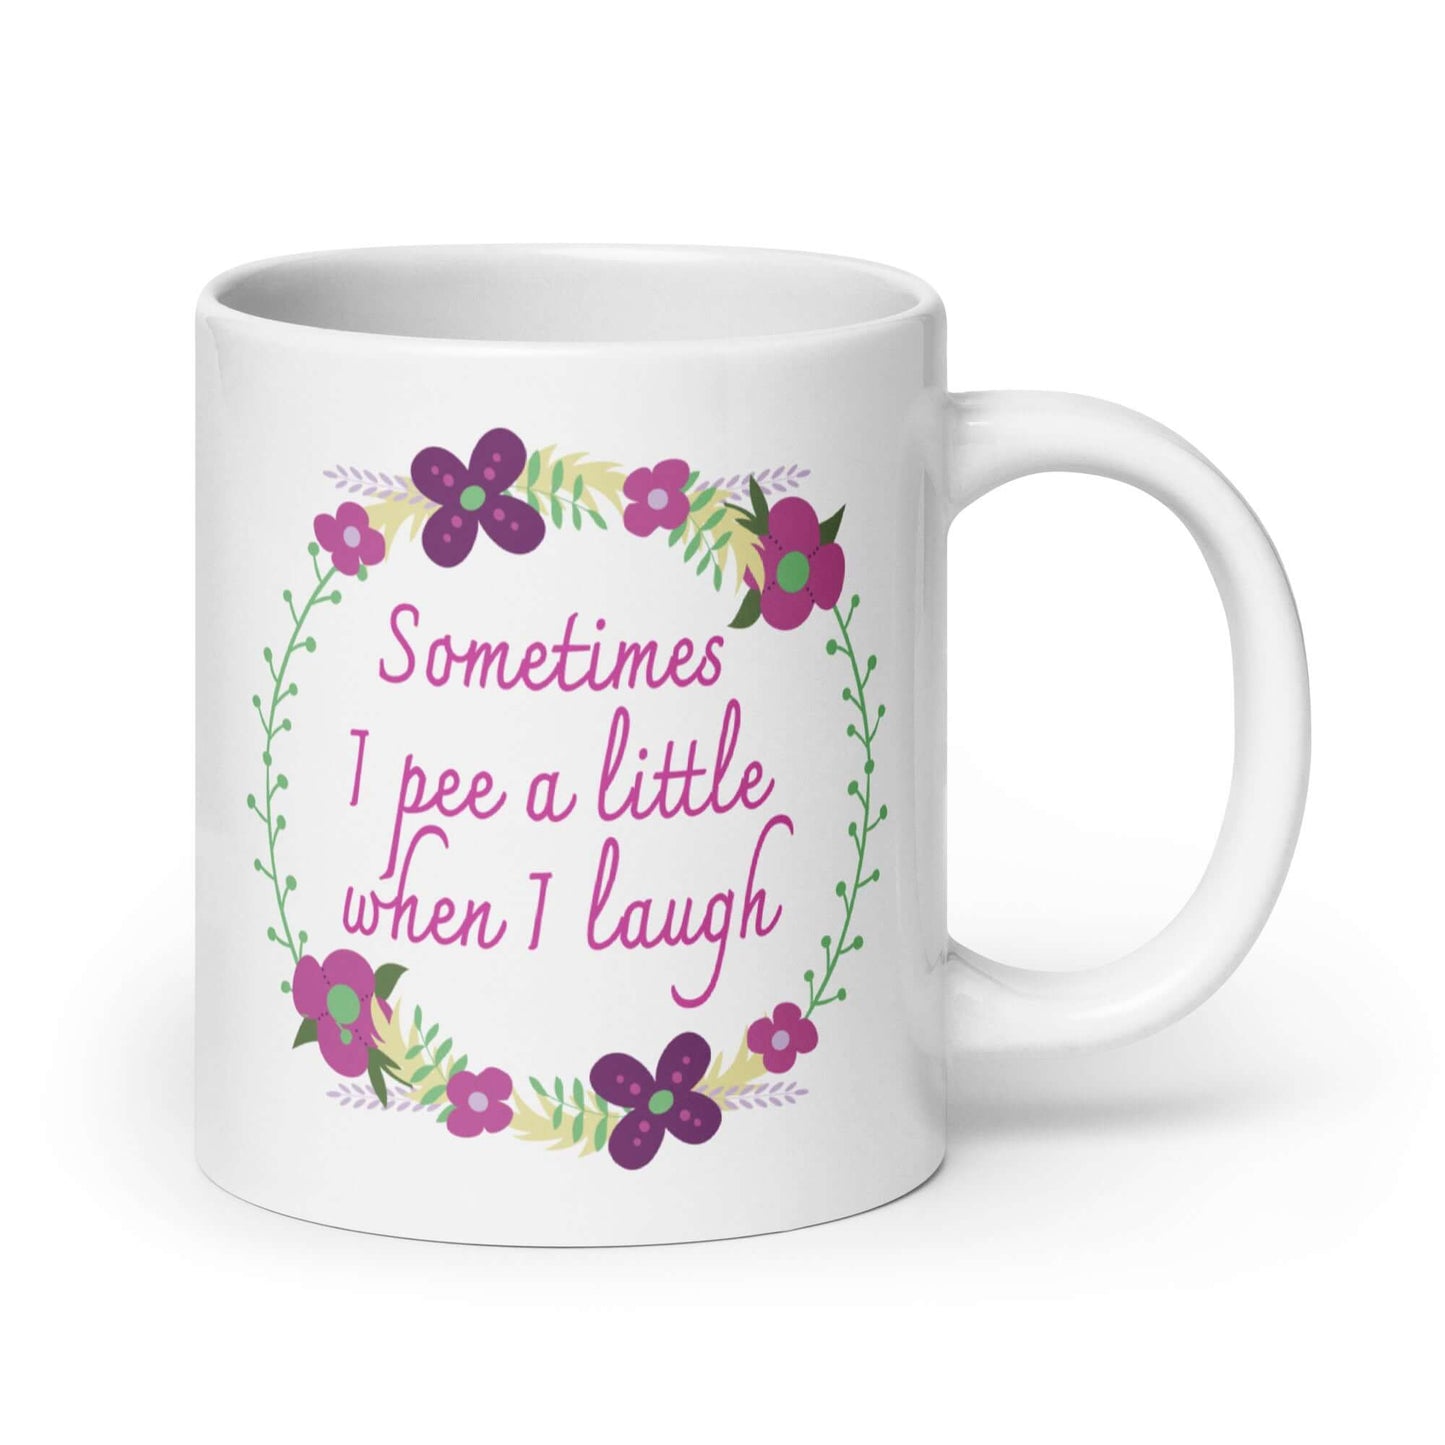 Sometimes I pee a little when I laugh funny coffee mug for mom. Mom problems